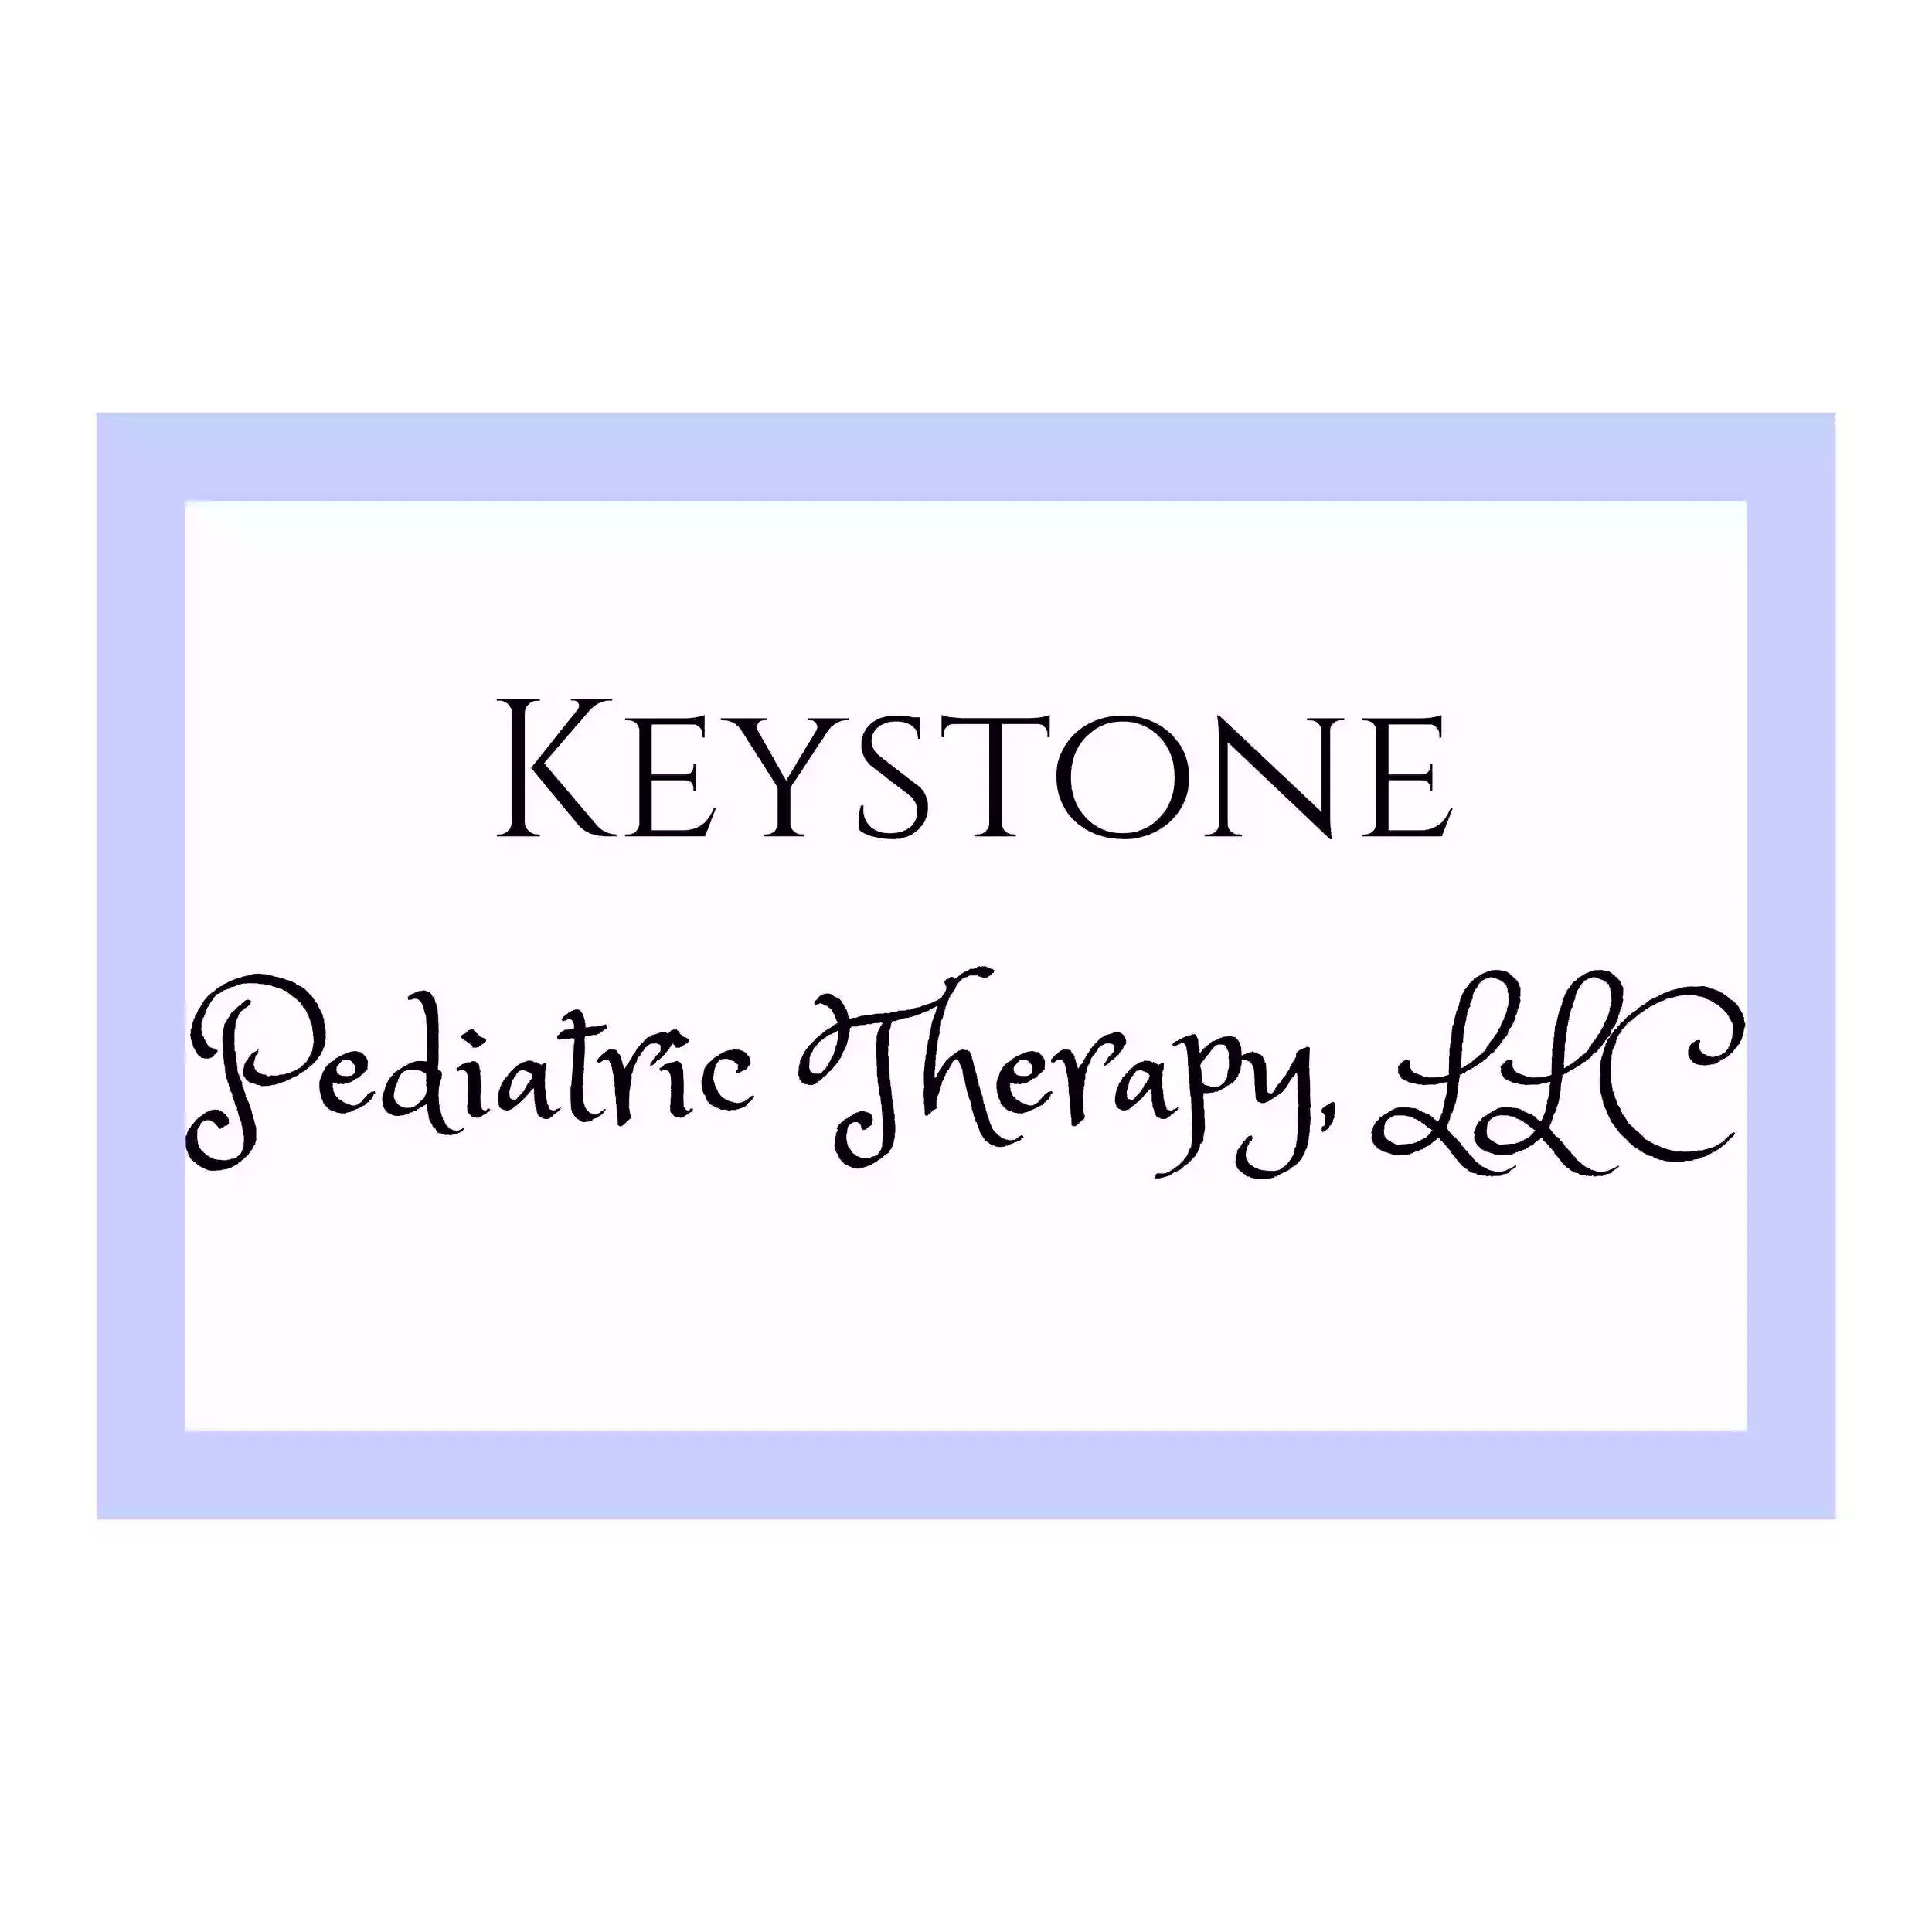 Keystone Pediatric Therapy, LLC